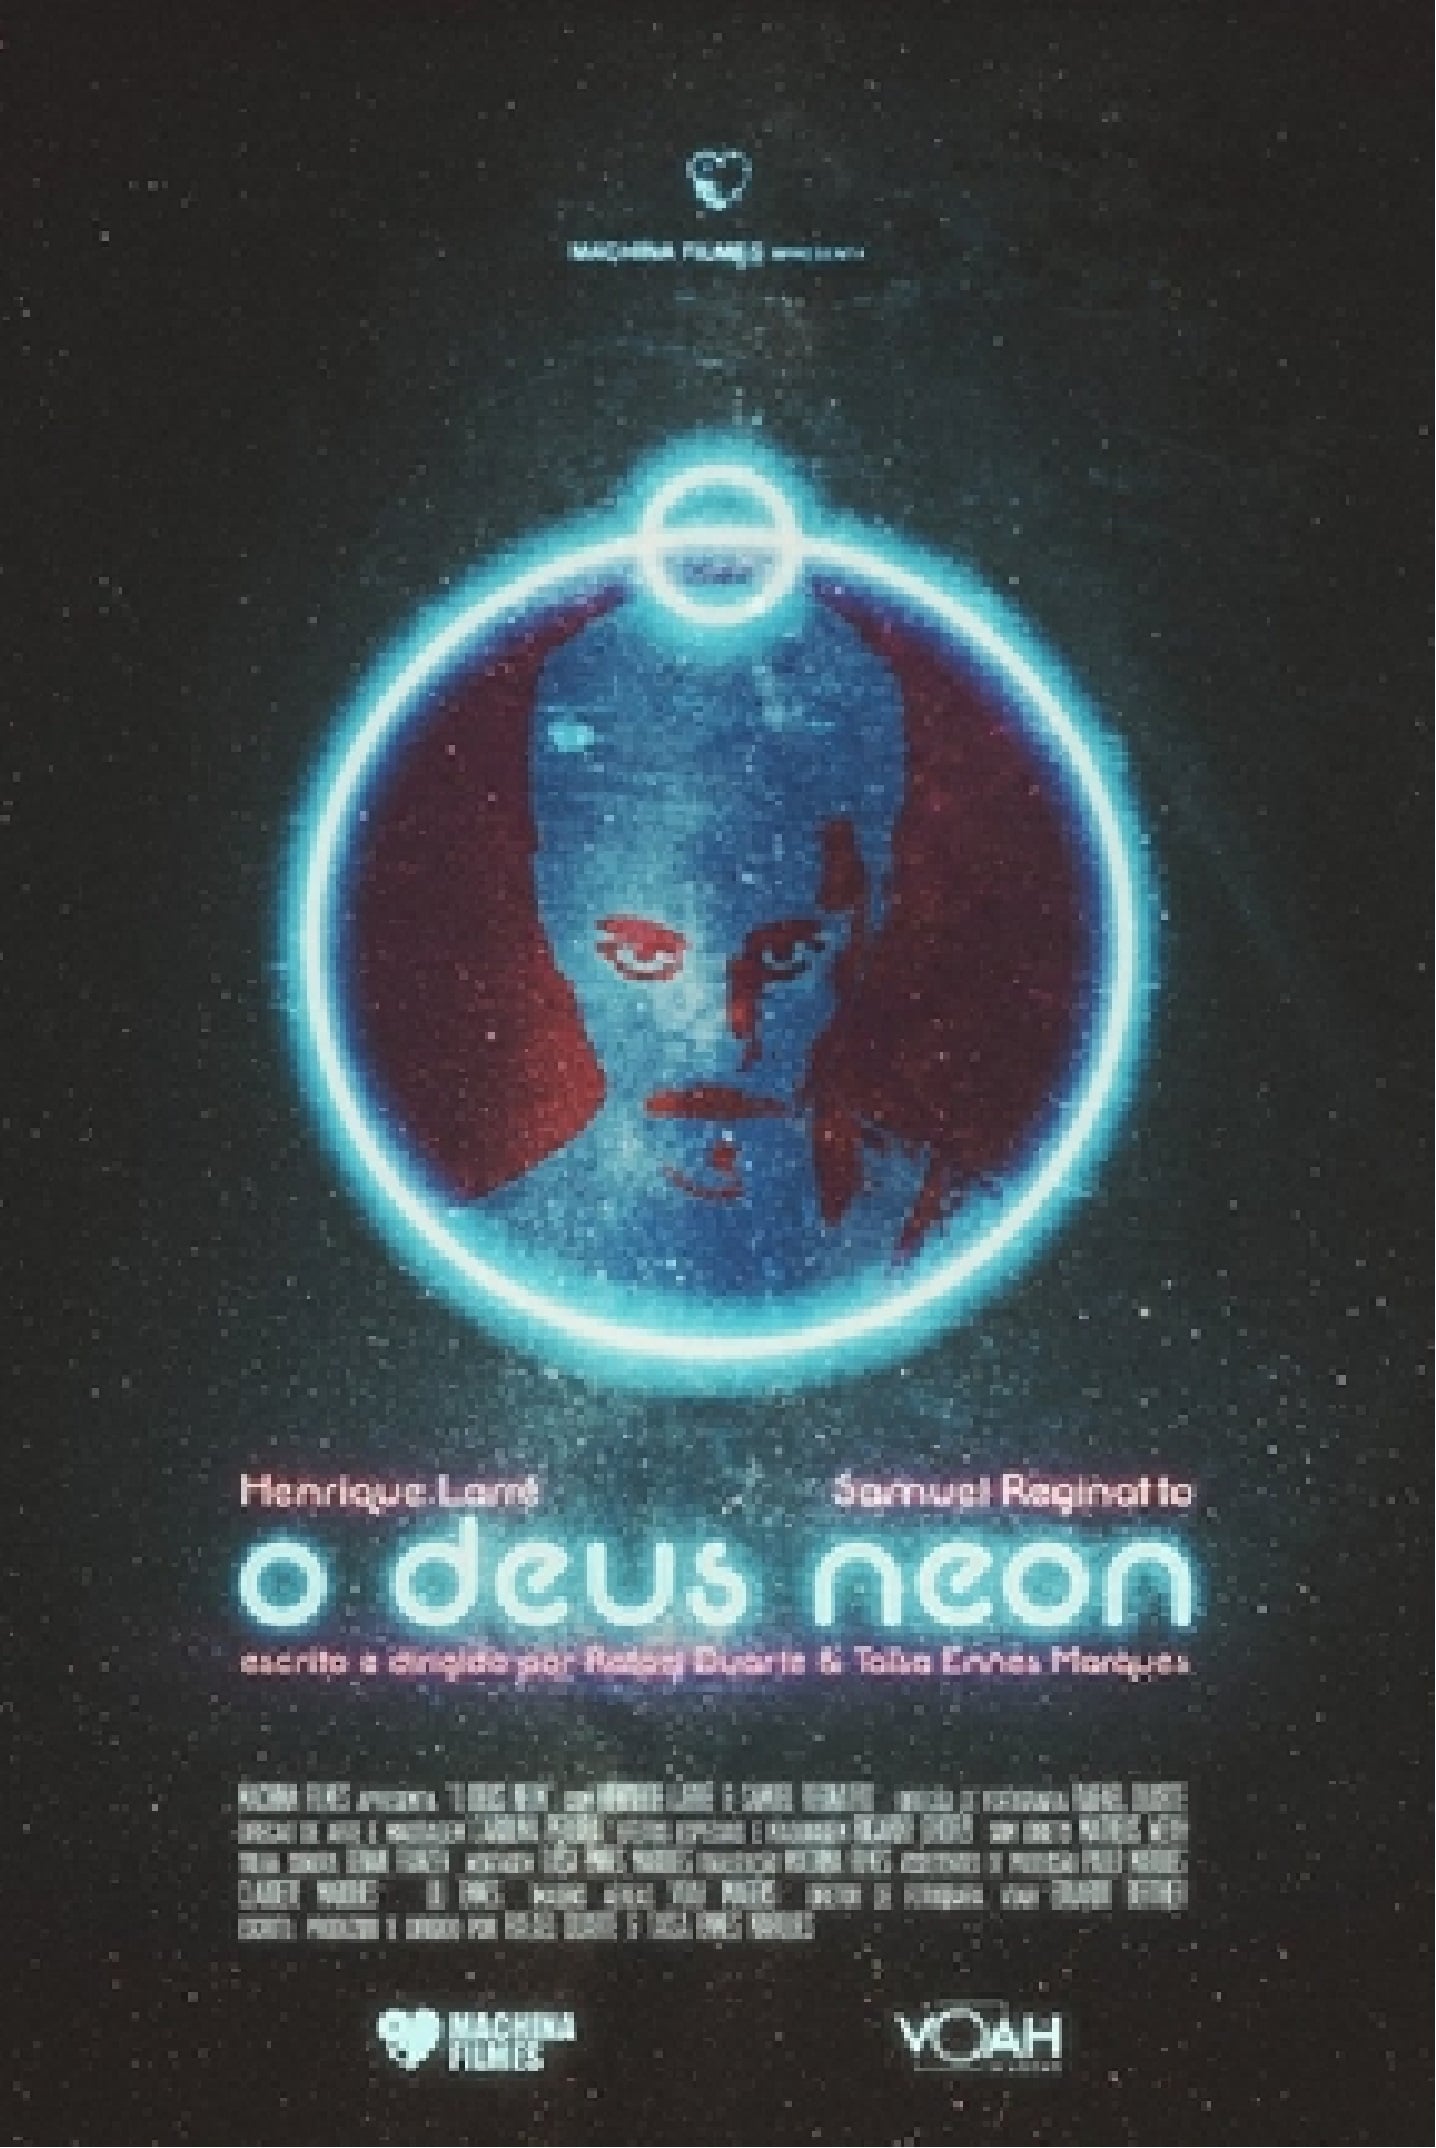 The Neon God